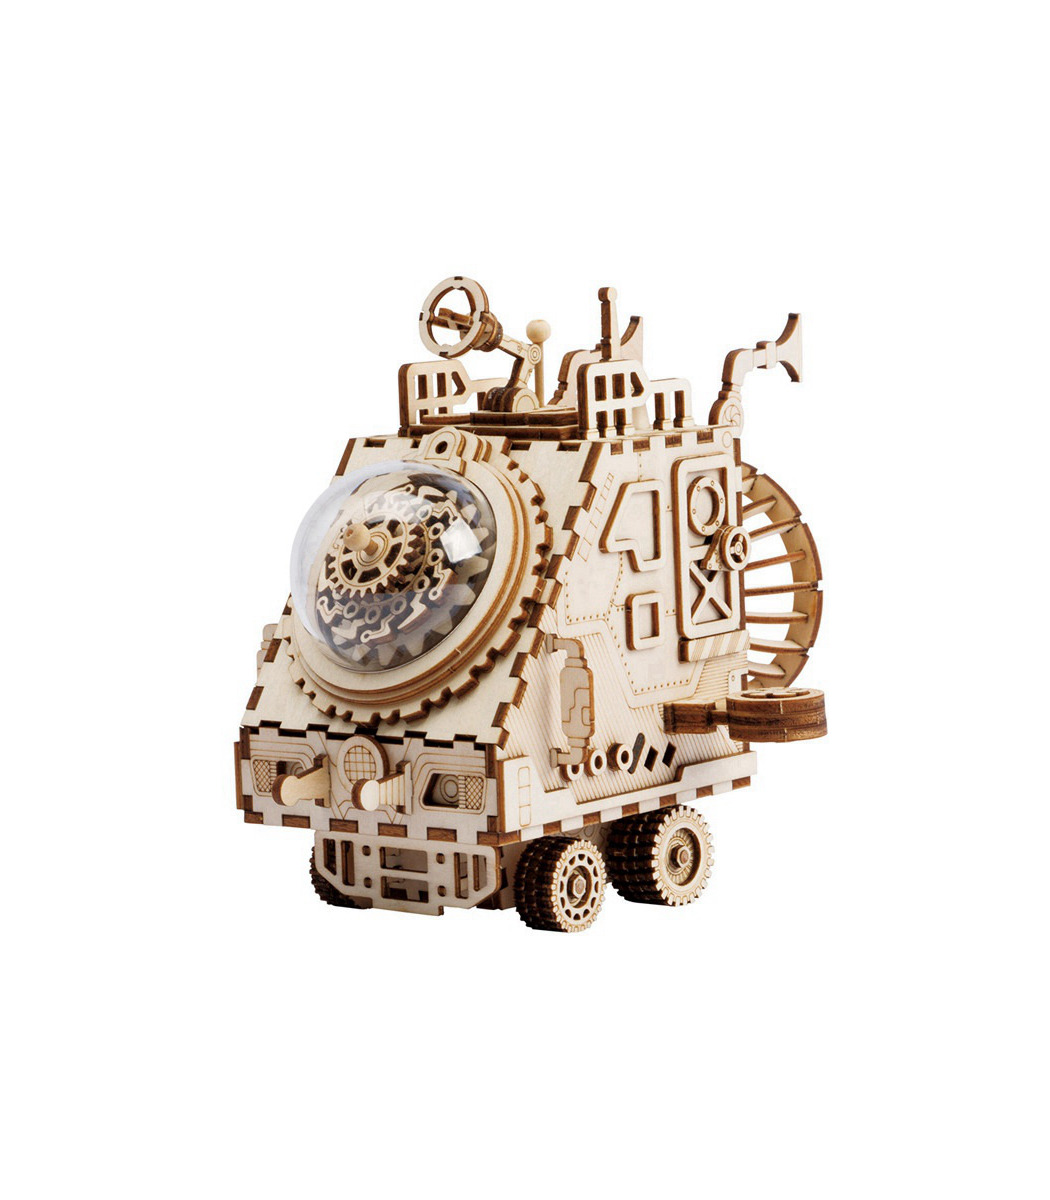 ROKR 3D Puzzle Laser Cut Wooden Model Construction Toy DIY Mechanical Car Crafts